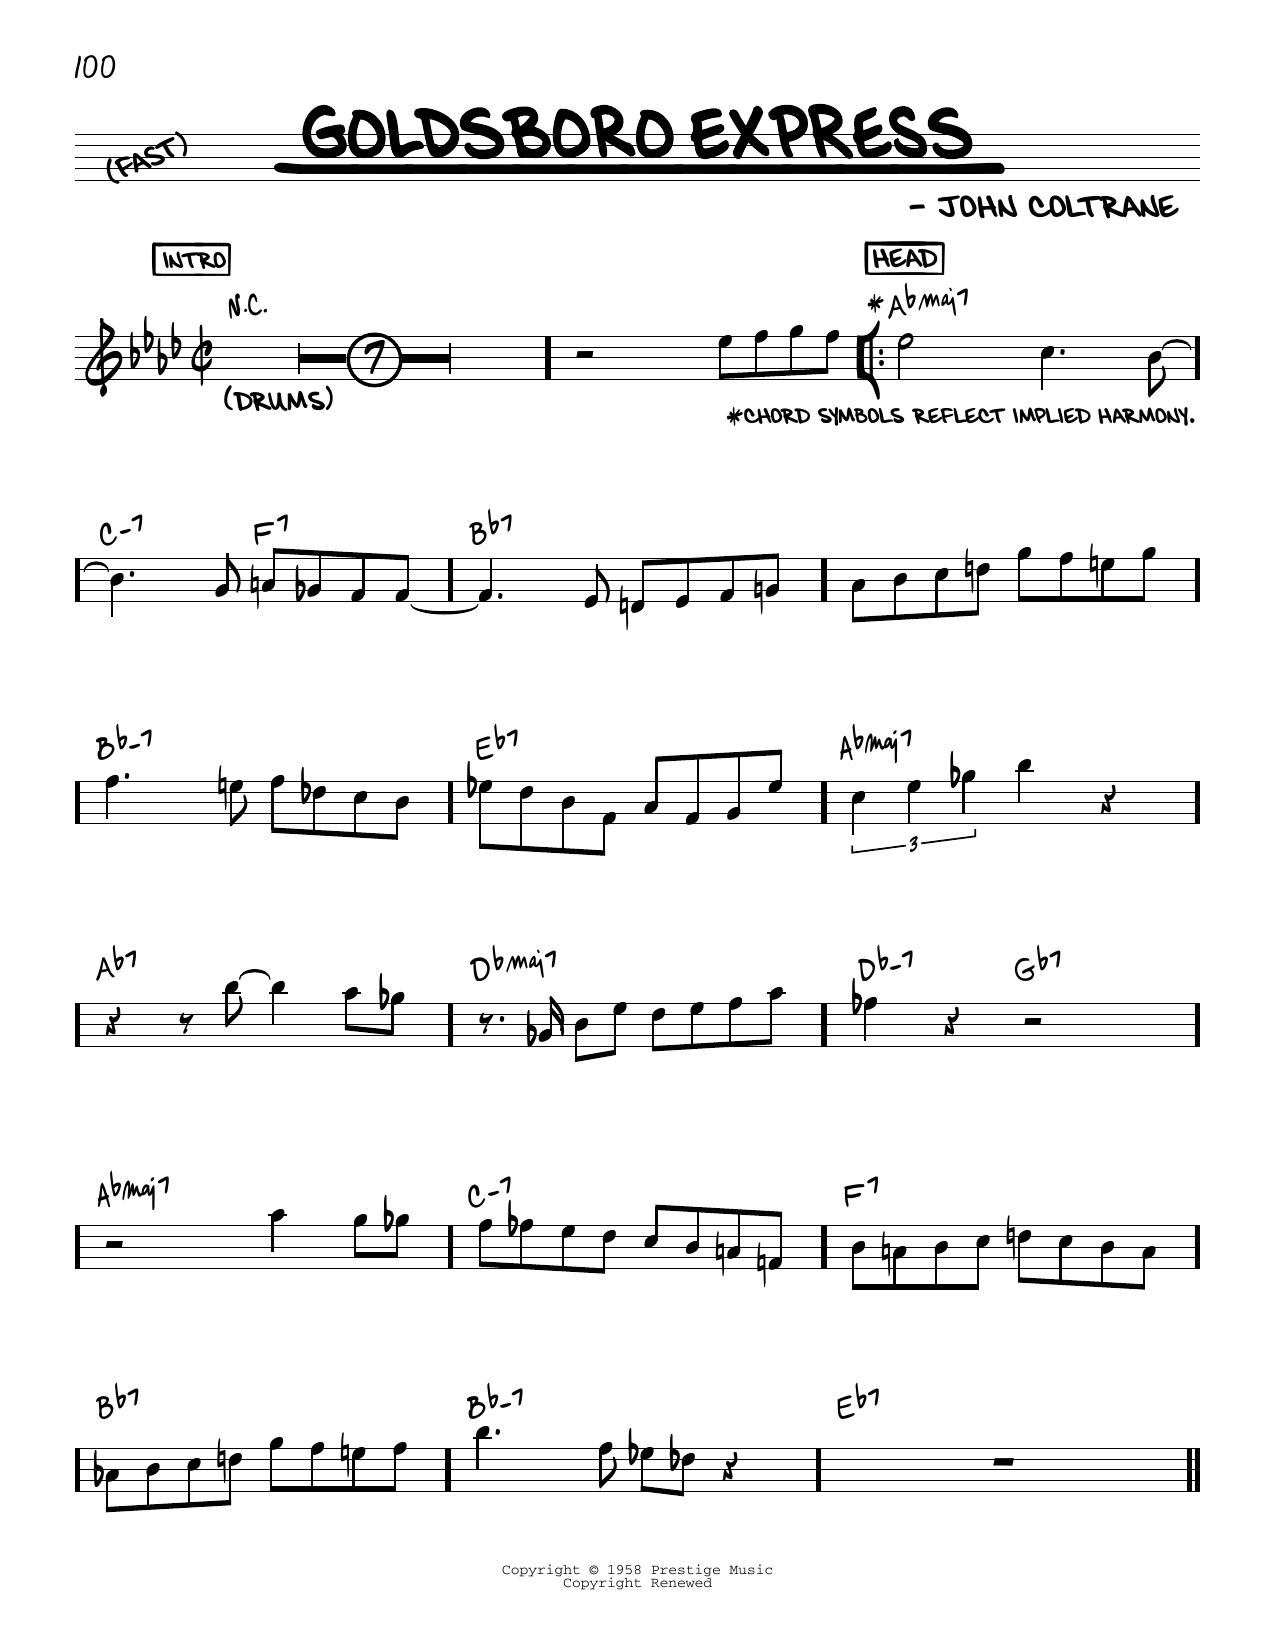 John Coltrane Goldsboro Express Sheet Music Notes & Chords for Real Book – Melody & Chords - Download or Print PDF